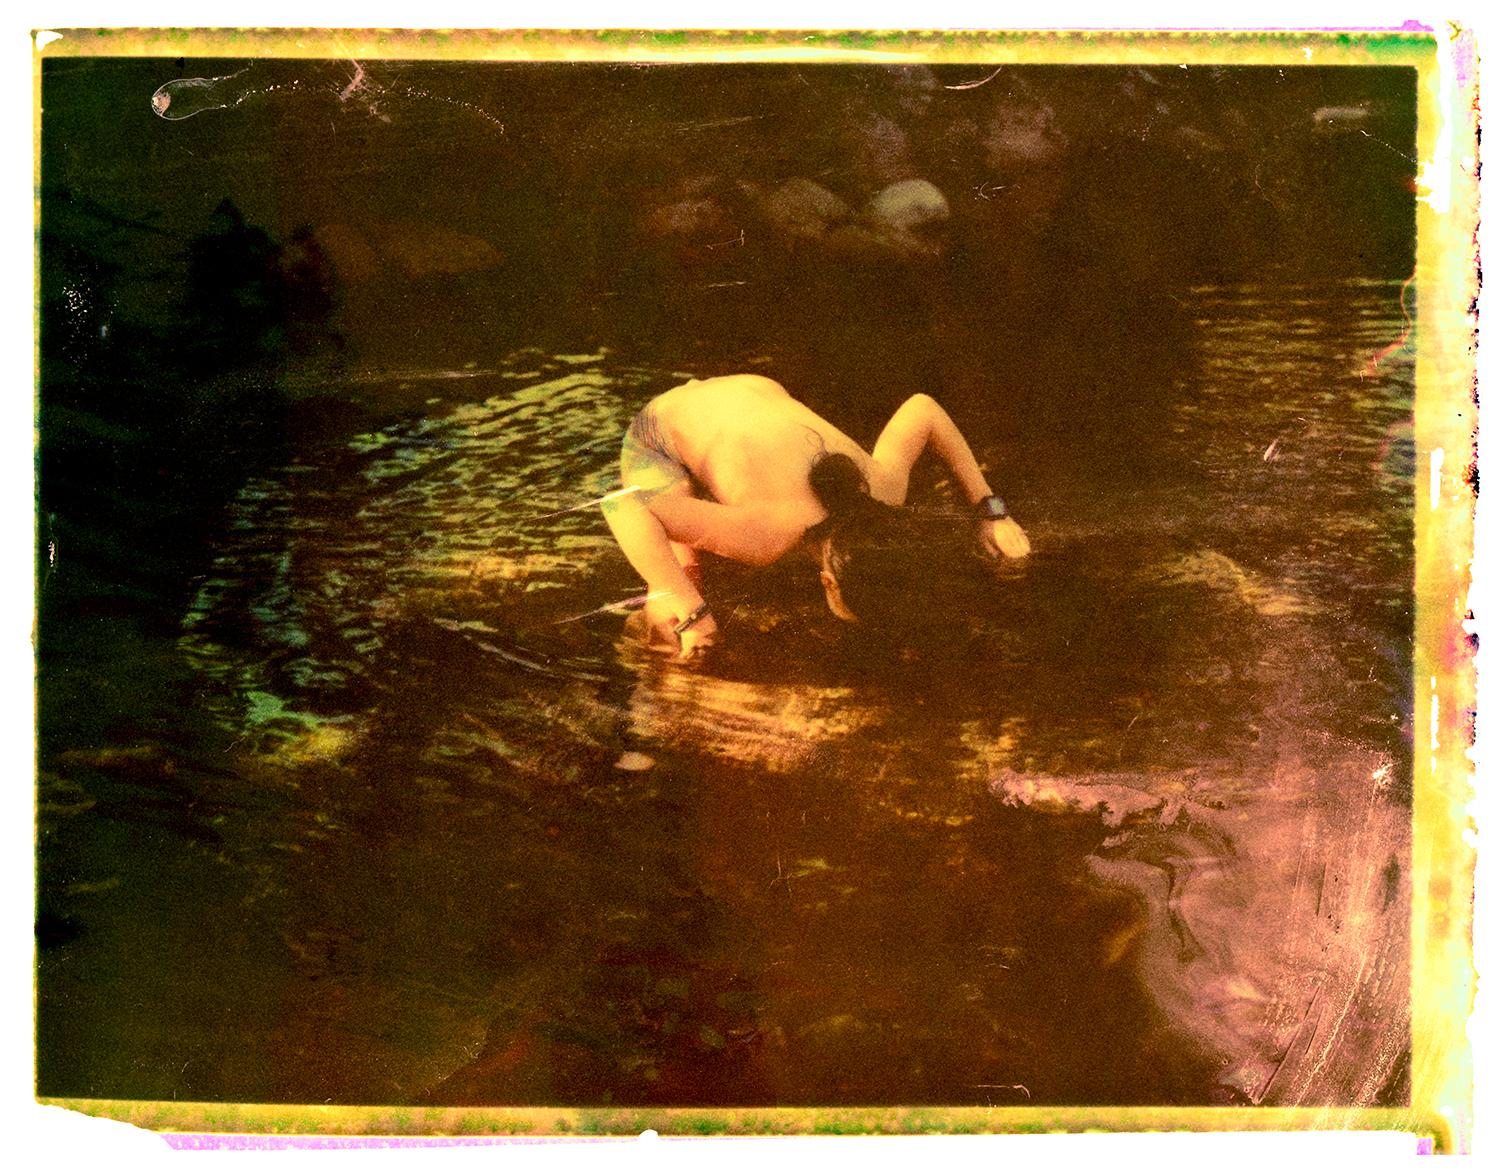 Gabriela at Eleven - Contemporary, Polaroid, Childhood